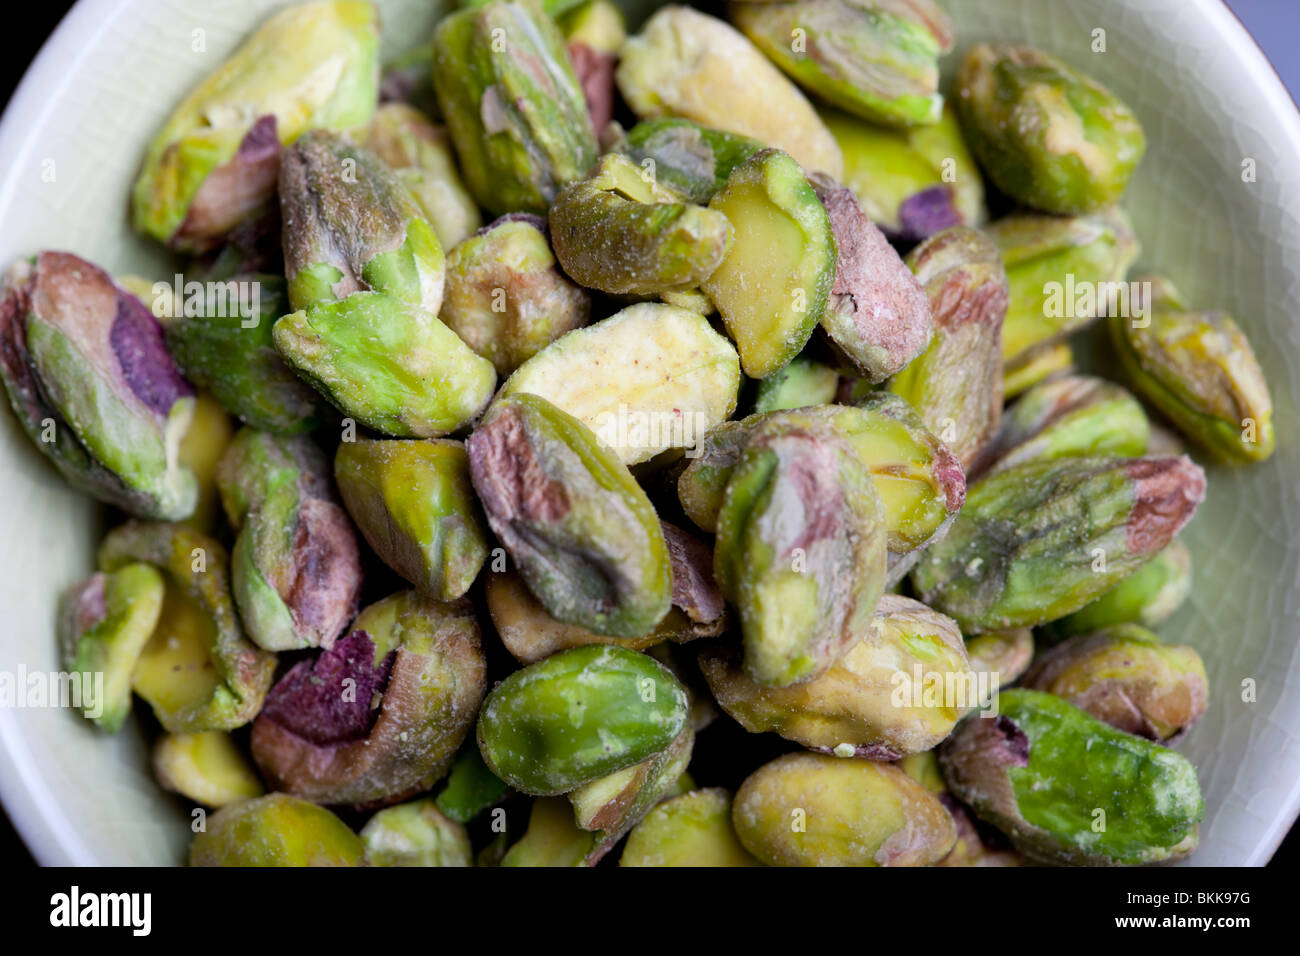 A pile of unshelled pistachio nuts Stock Photo